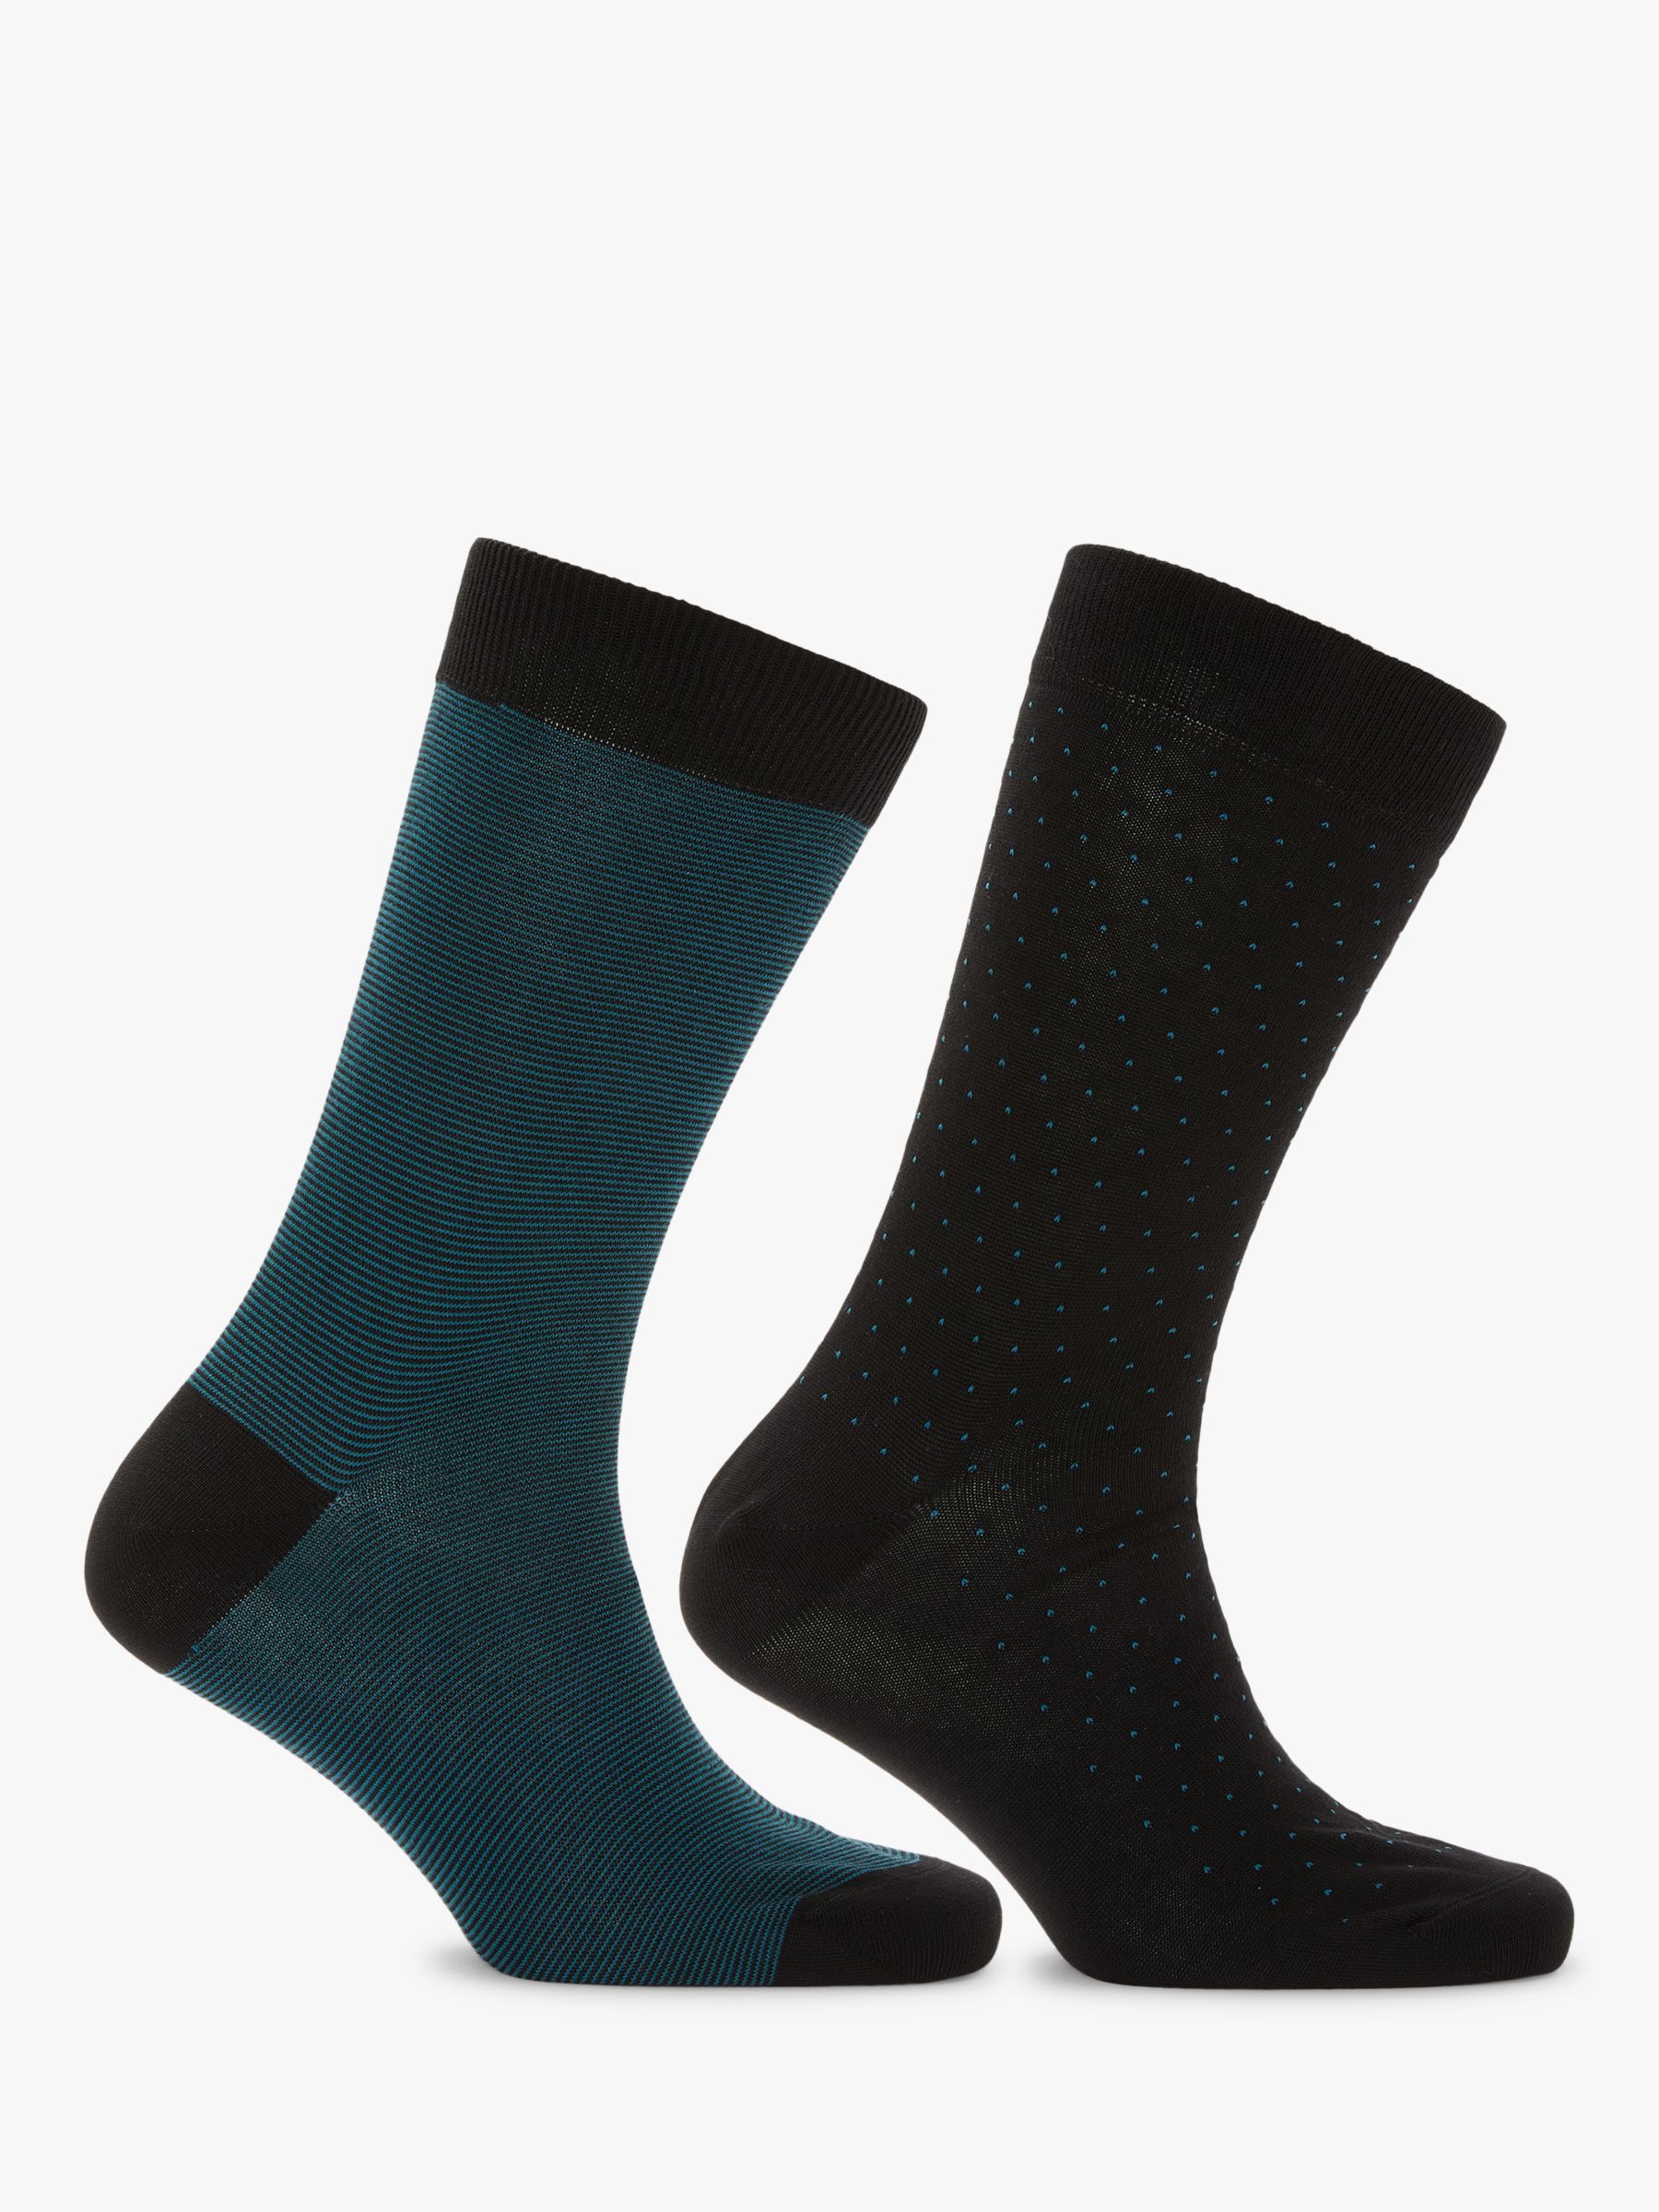 John Lewis & Partners Made in Italy Birdseye Fine Stripe Socks, Pack of 2, Black/Tuquoise